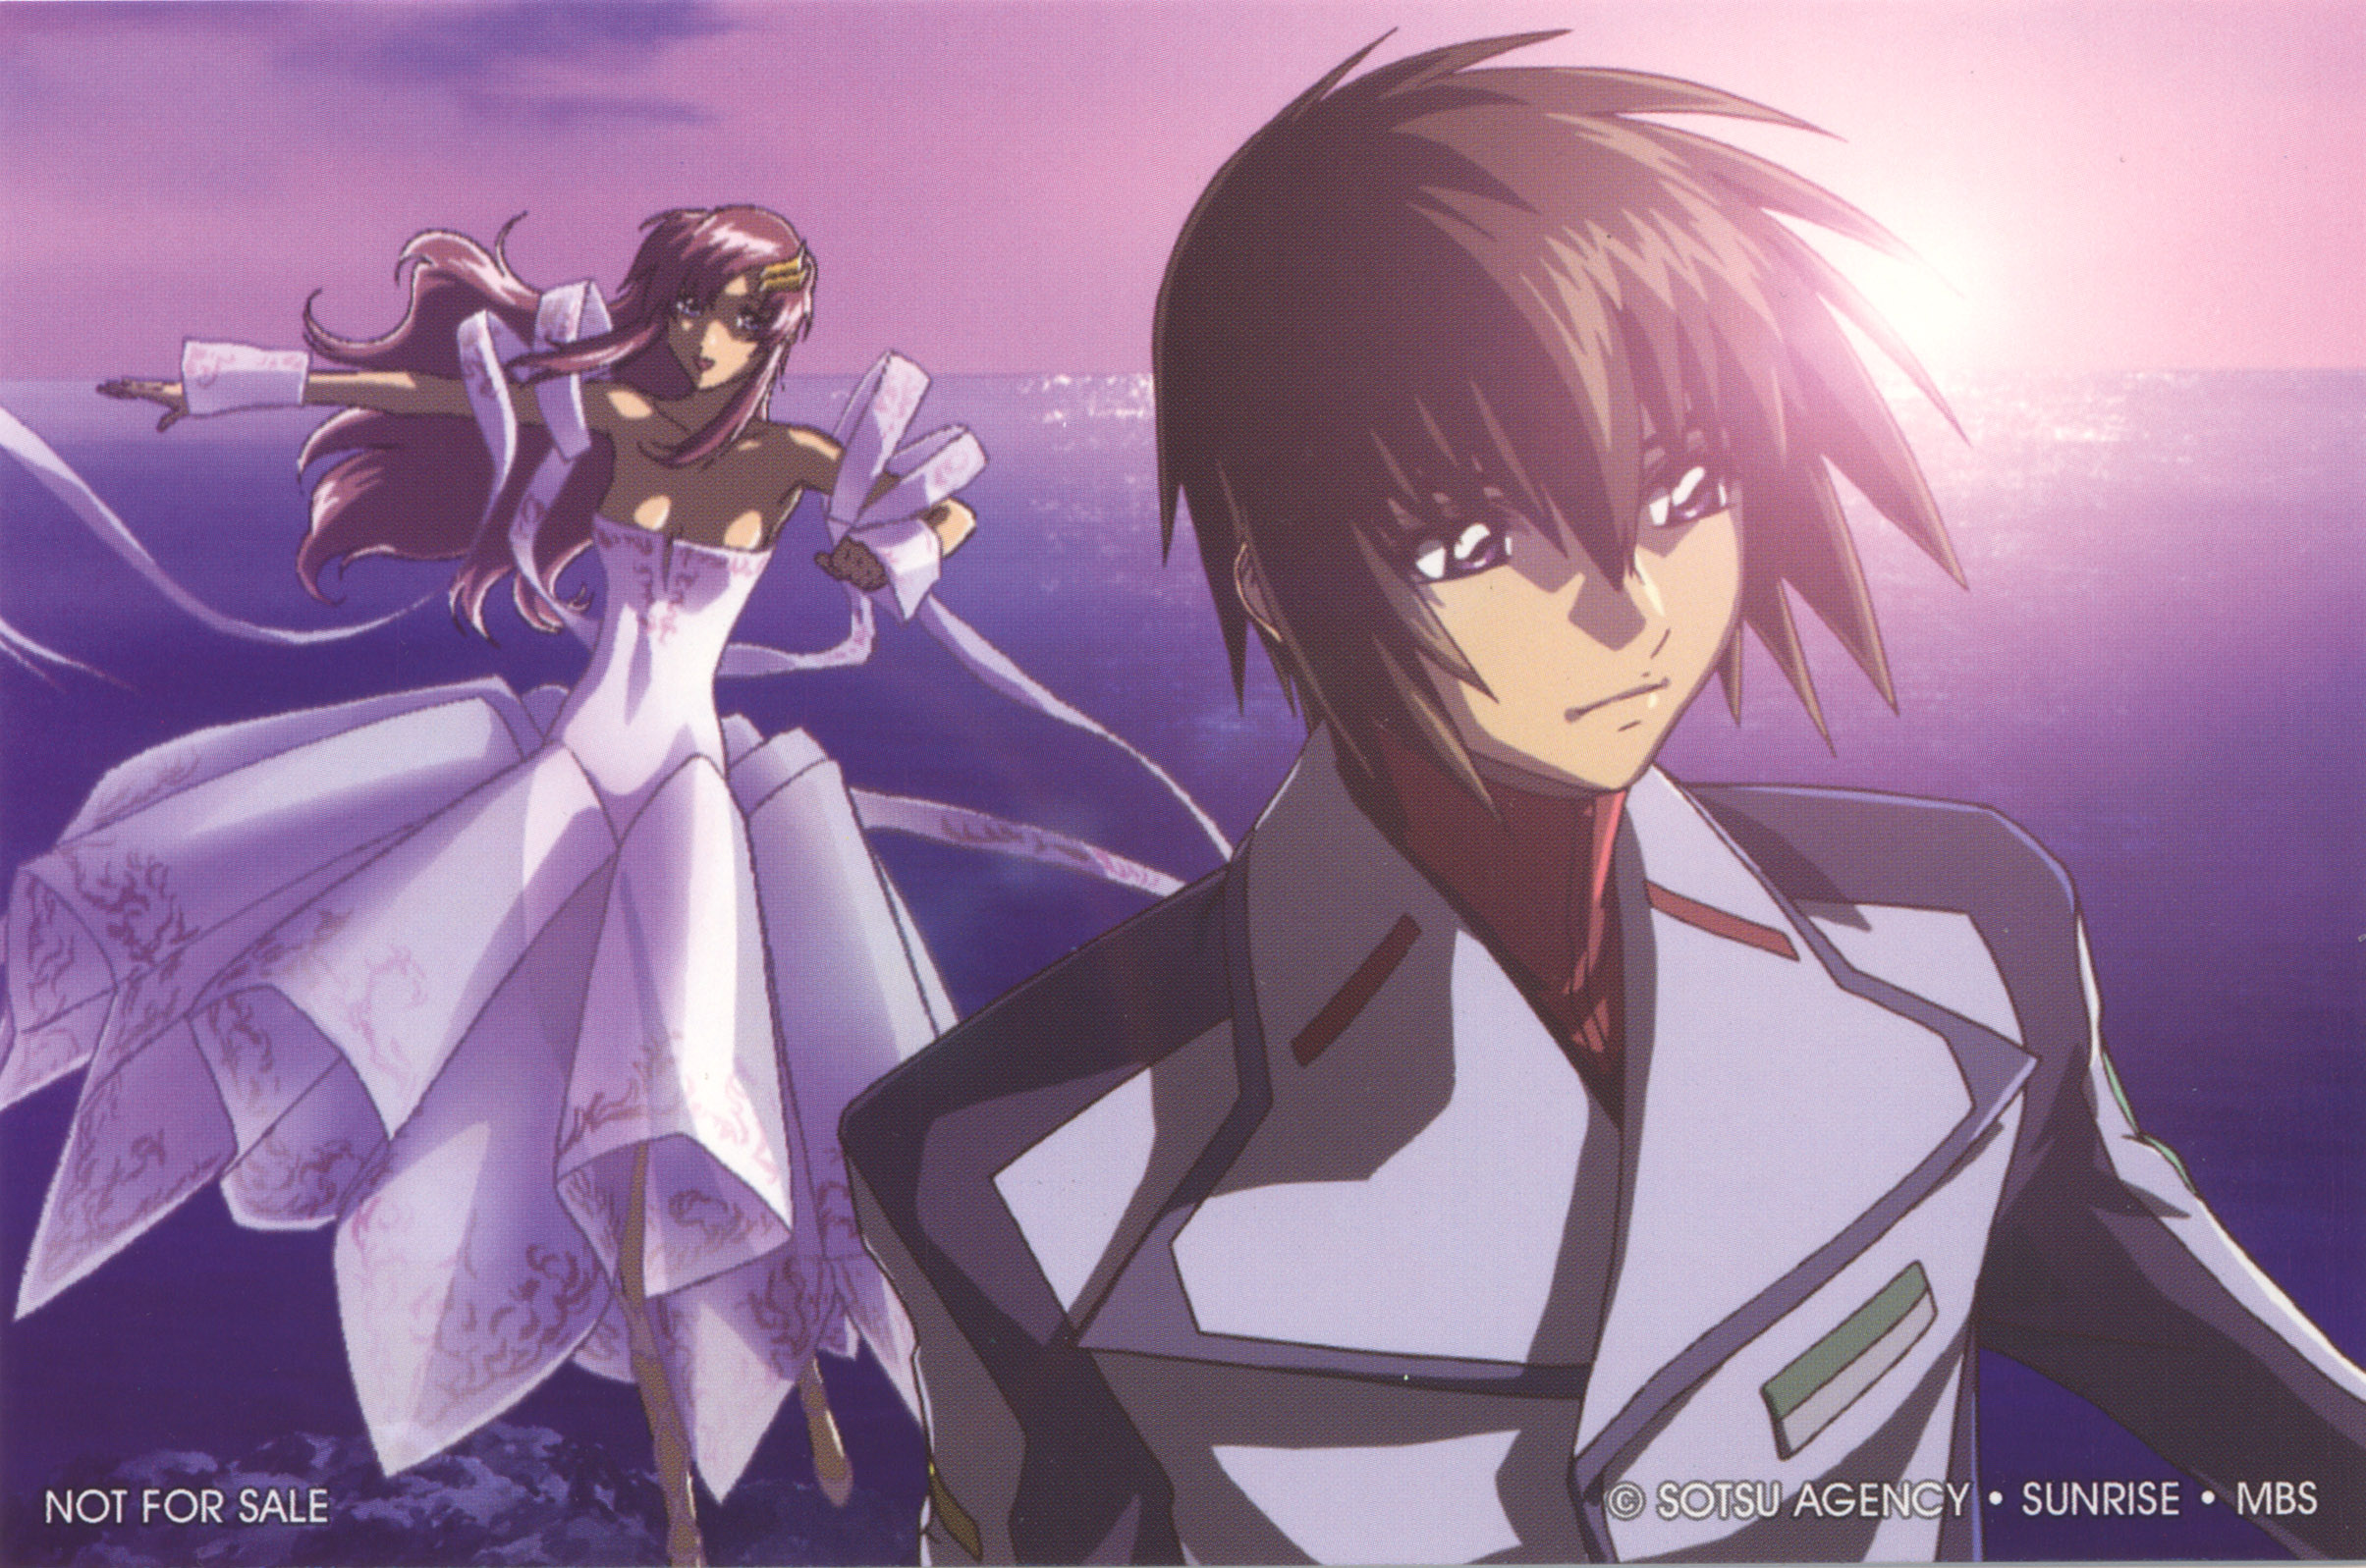 Anime Mobile Suit Gundam Seed Destiny HD Wallpaper | Background Image